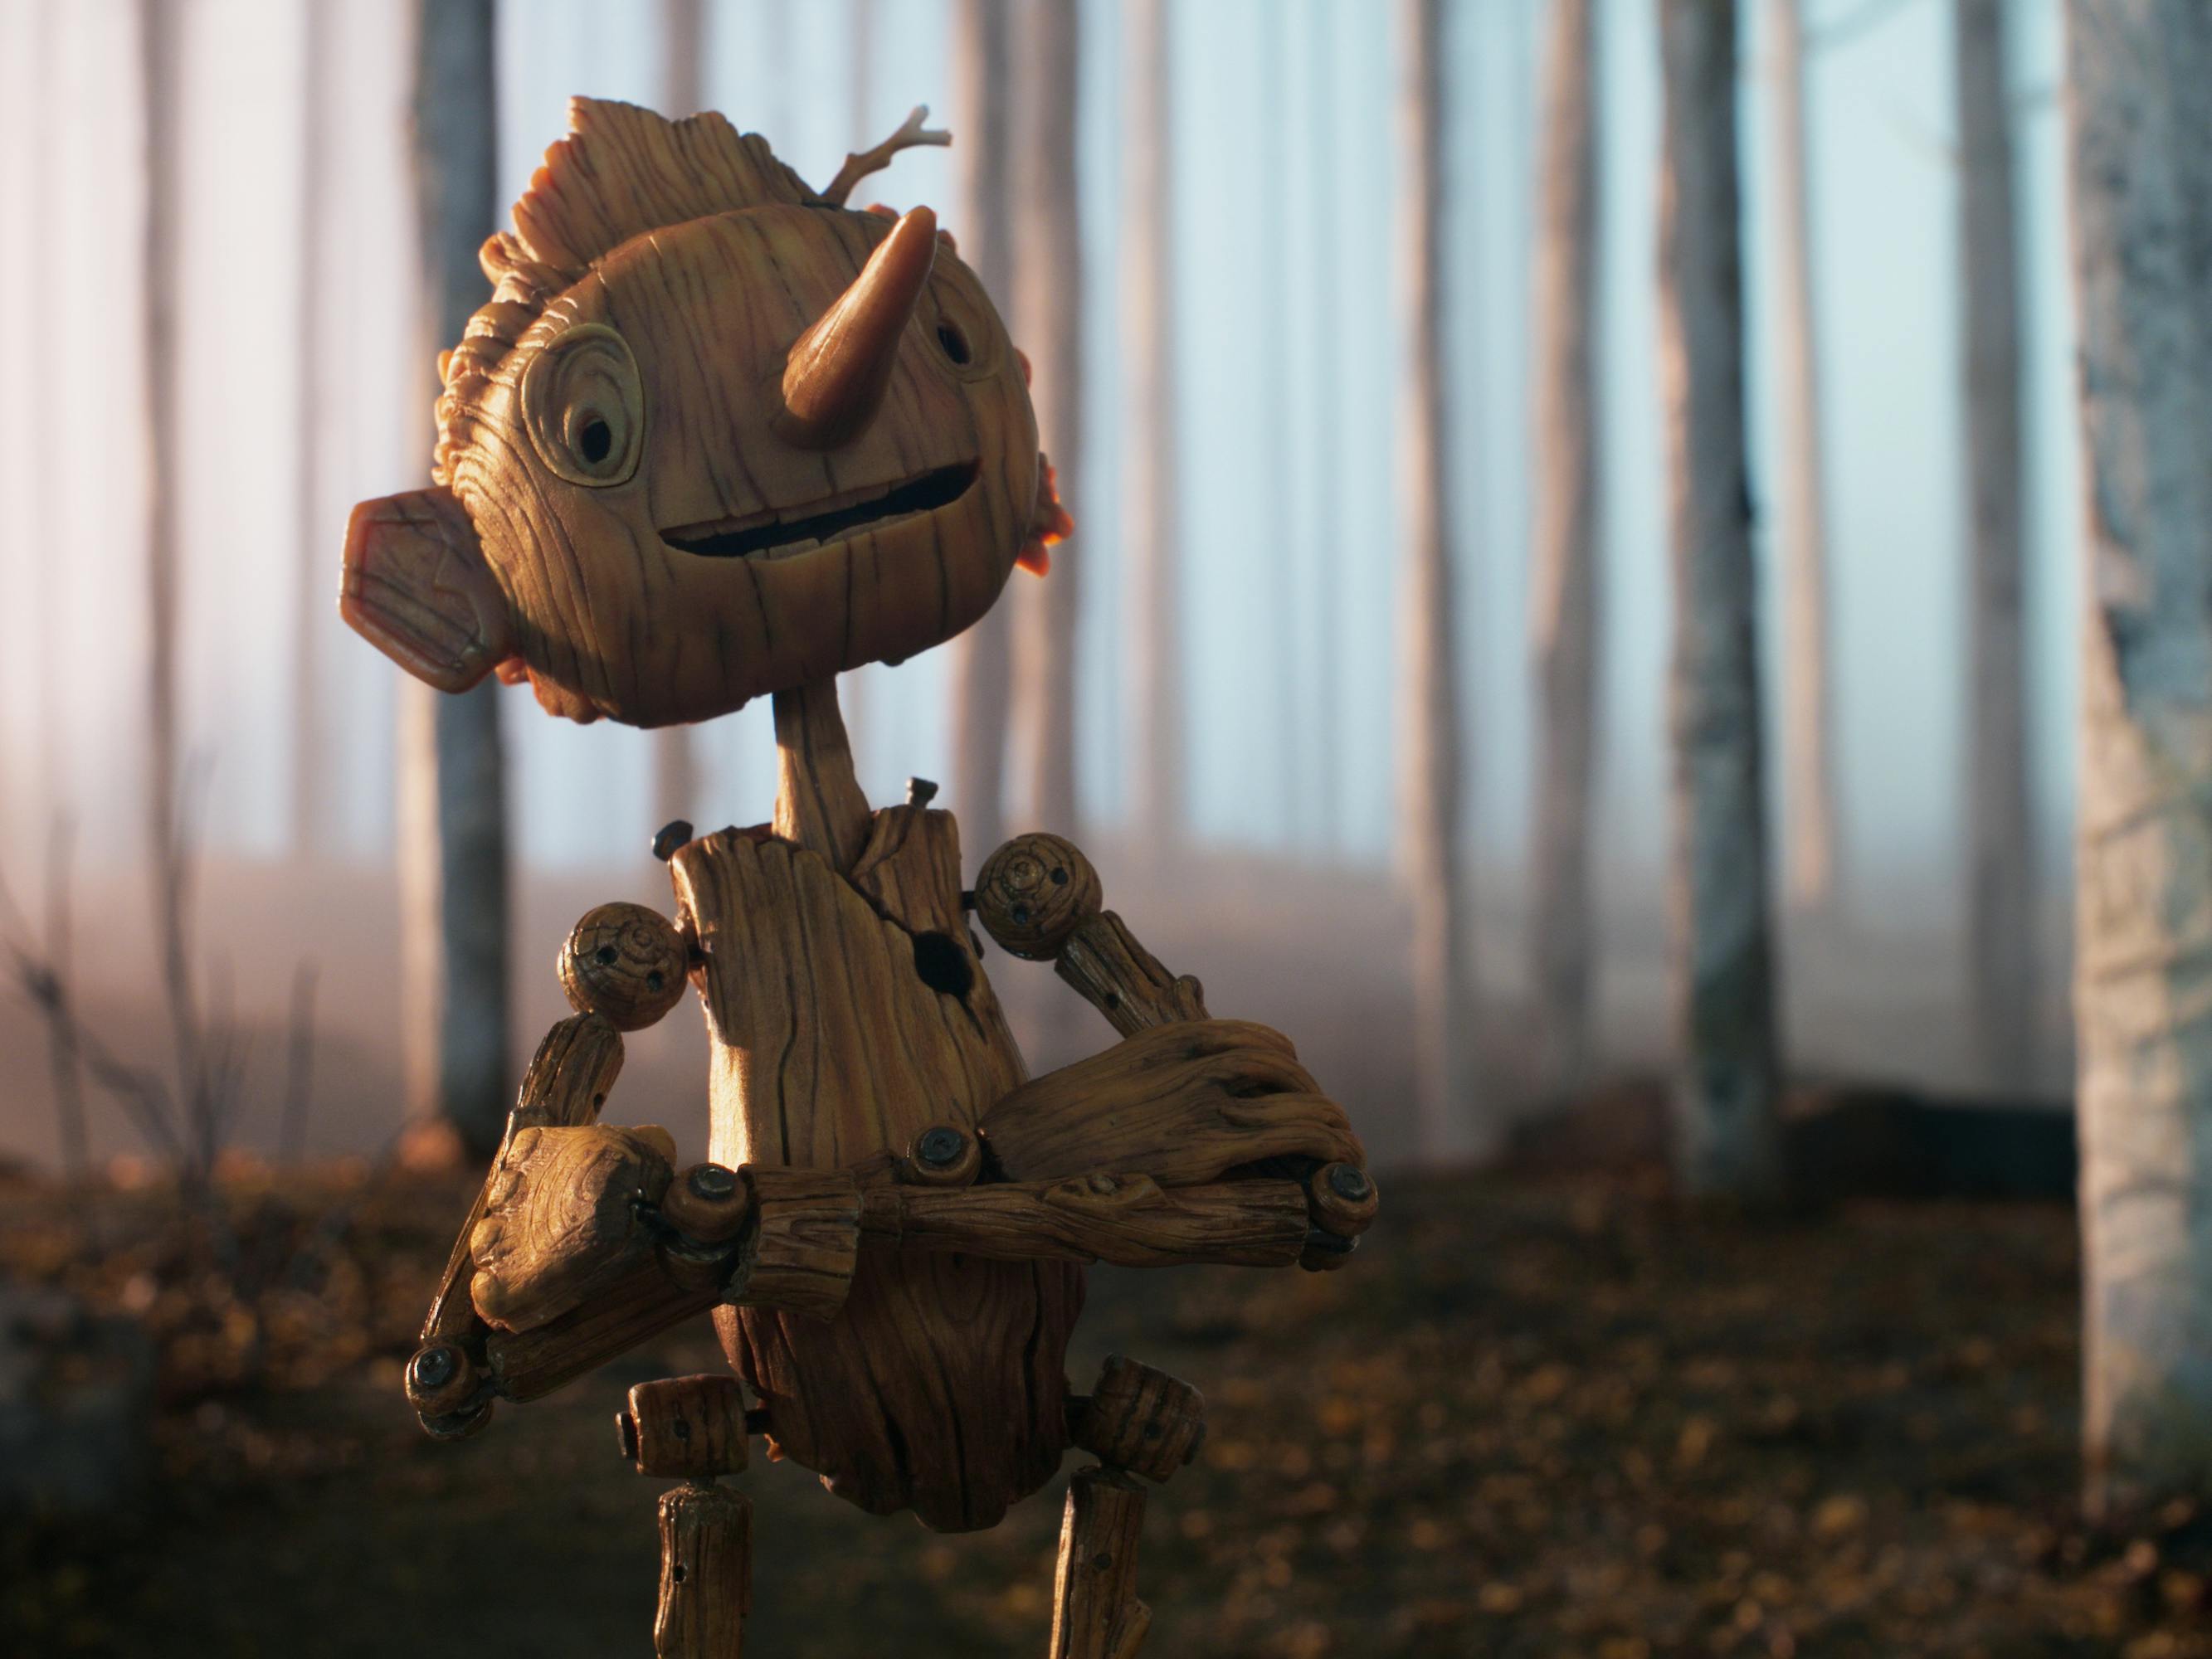 Pinocchio (Gregory Mann) wanders around a barren forrest.